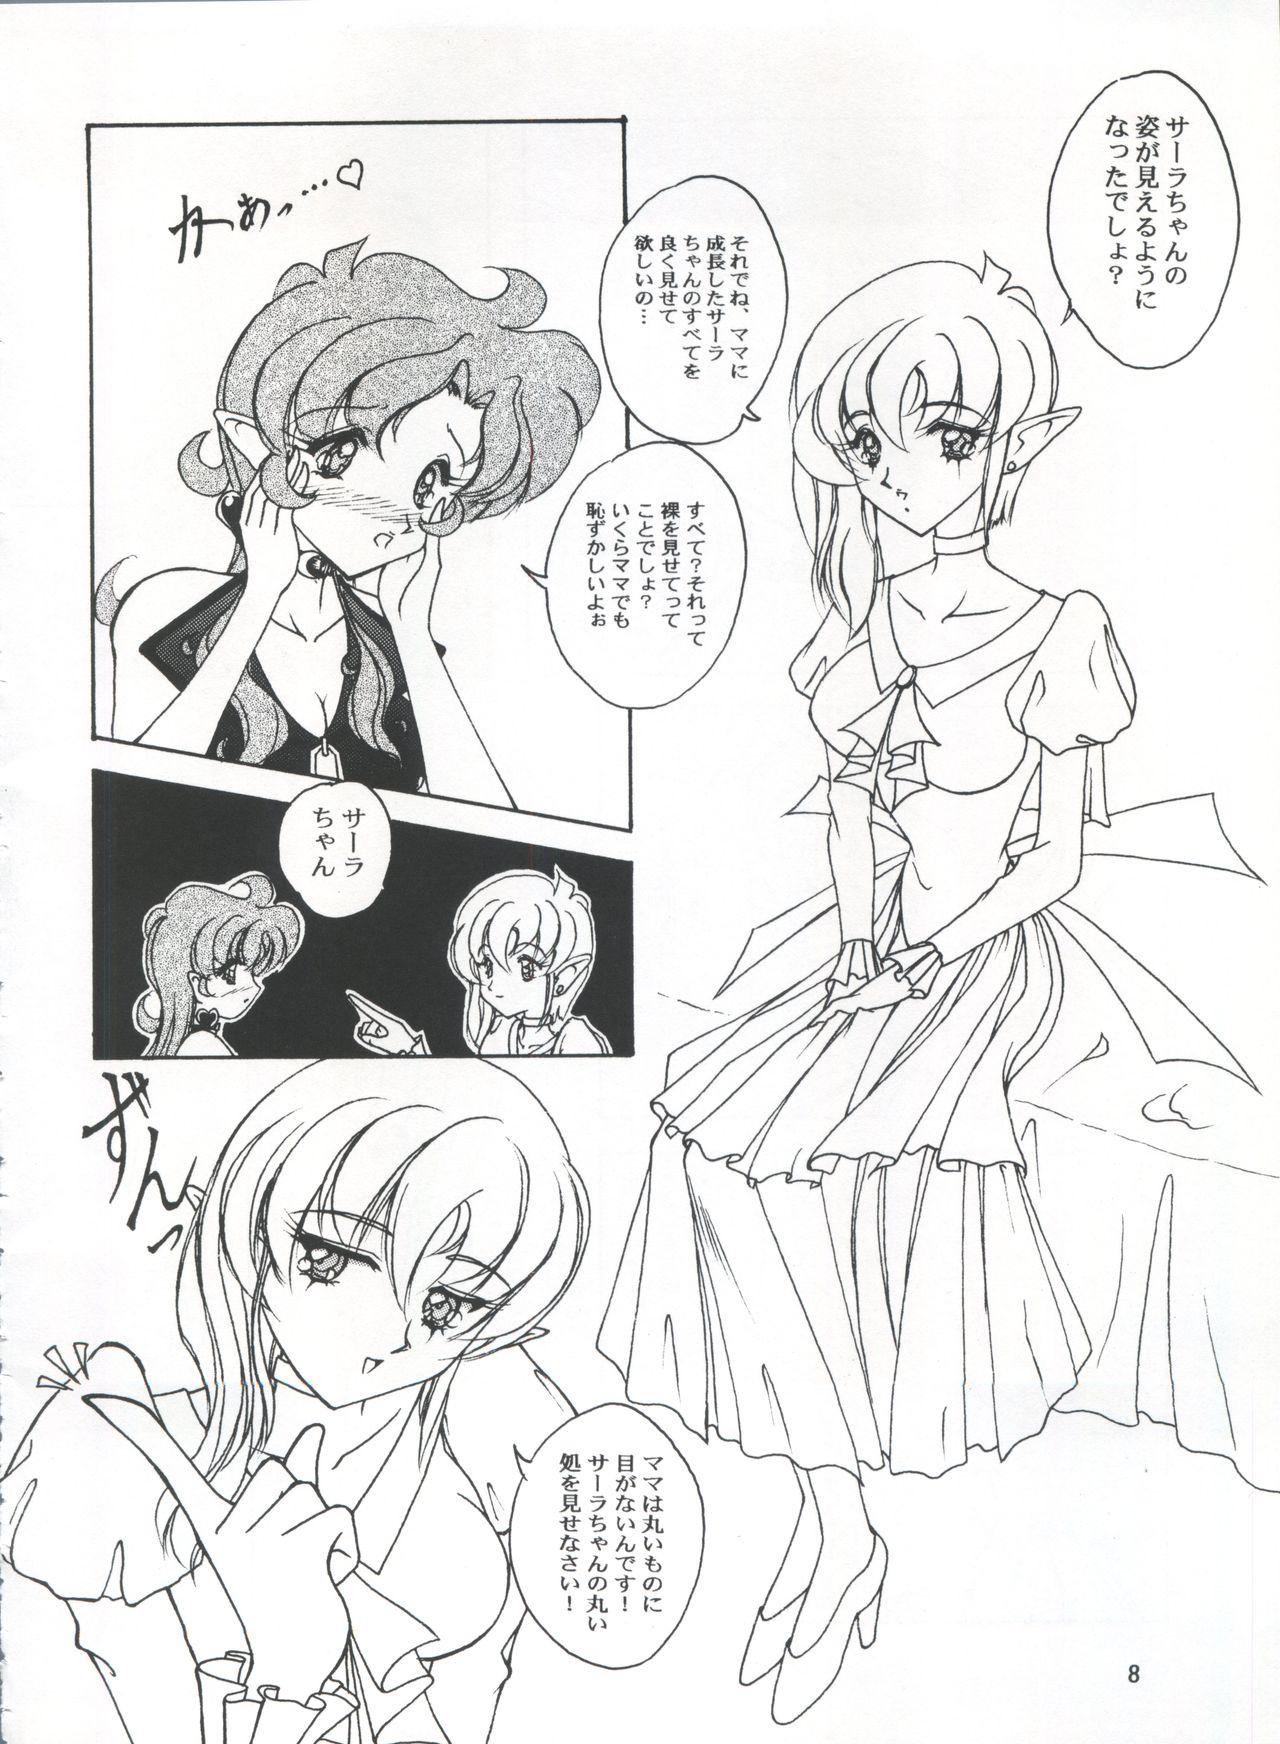 Wife LESBOS MILLENNIUM - Neon genesis evangelion Sailor moon Tenshi ni narumon Rubdown - Page 8